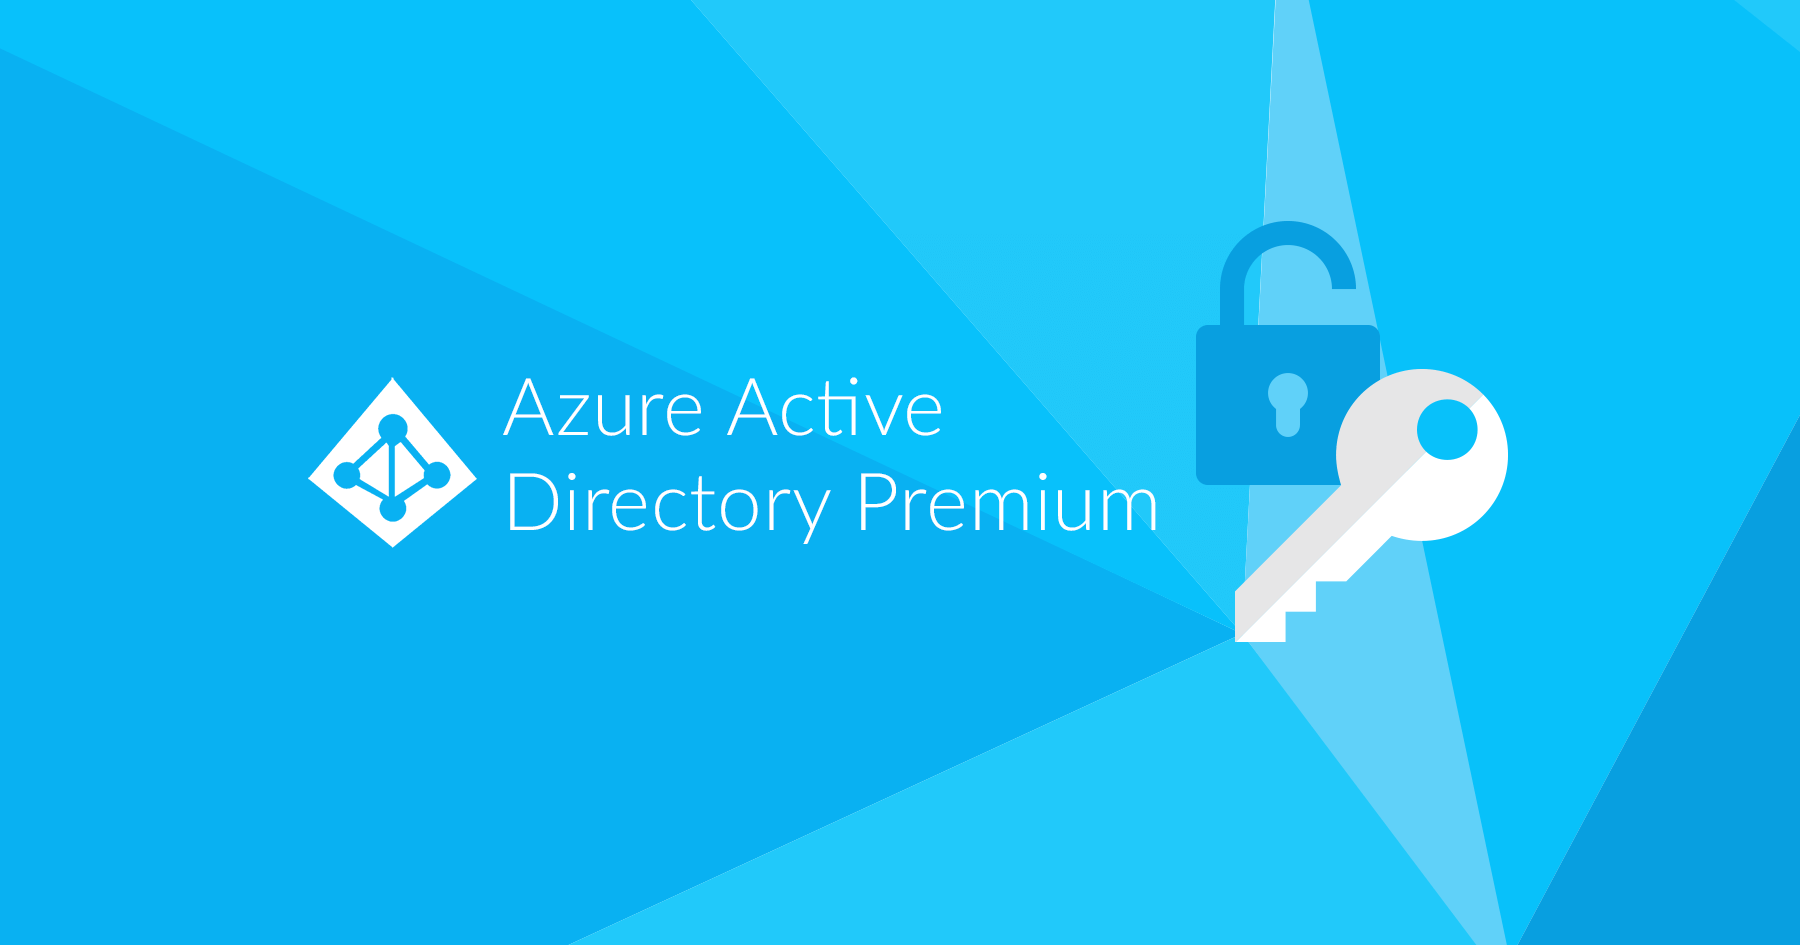 Azure Active Directory Logo - Self-serve Password Reset with Azure Active Directory Premium